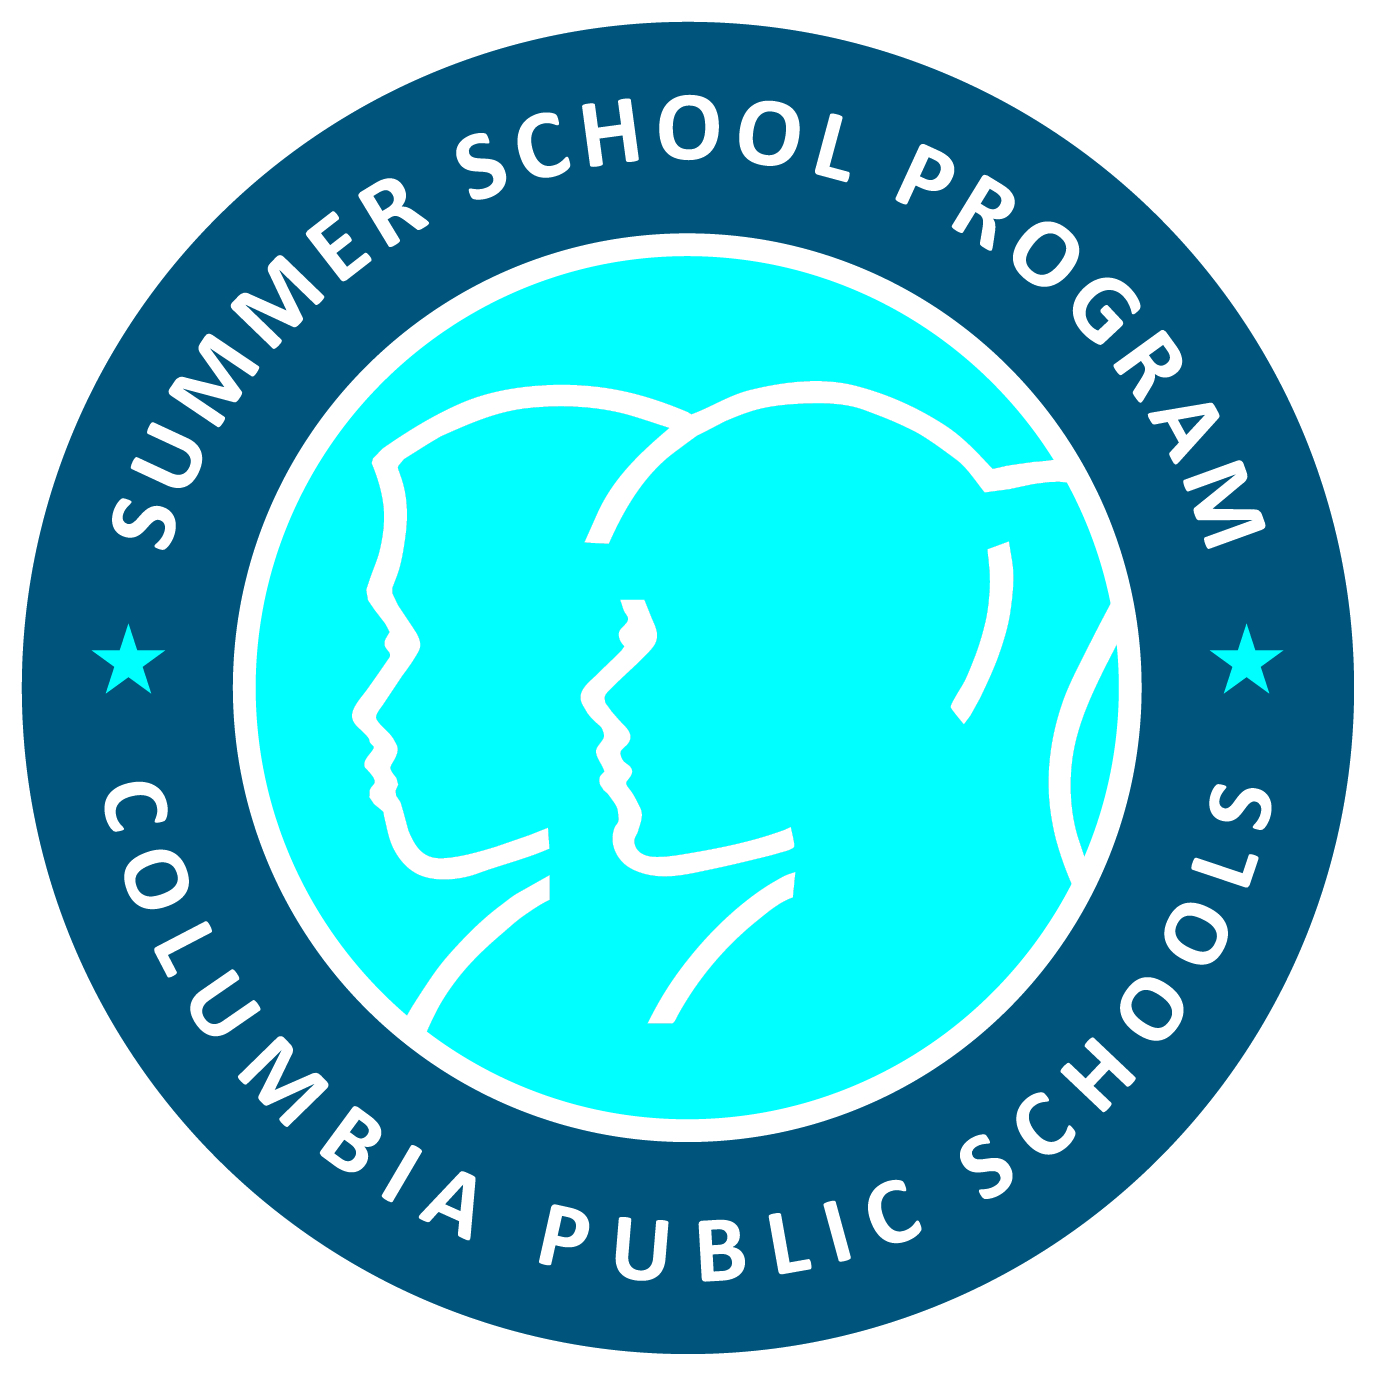 CPS Style Guide / Summer School Program